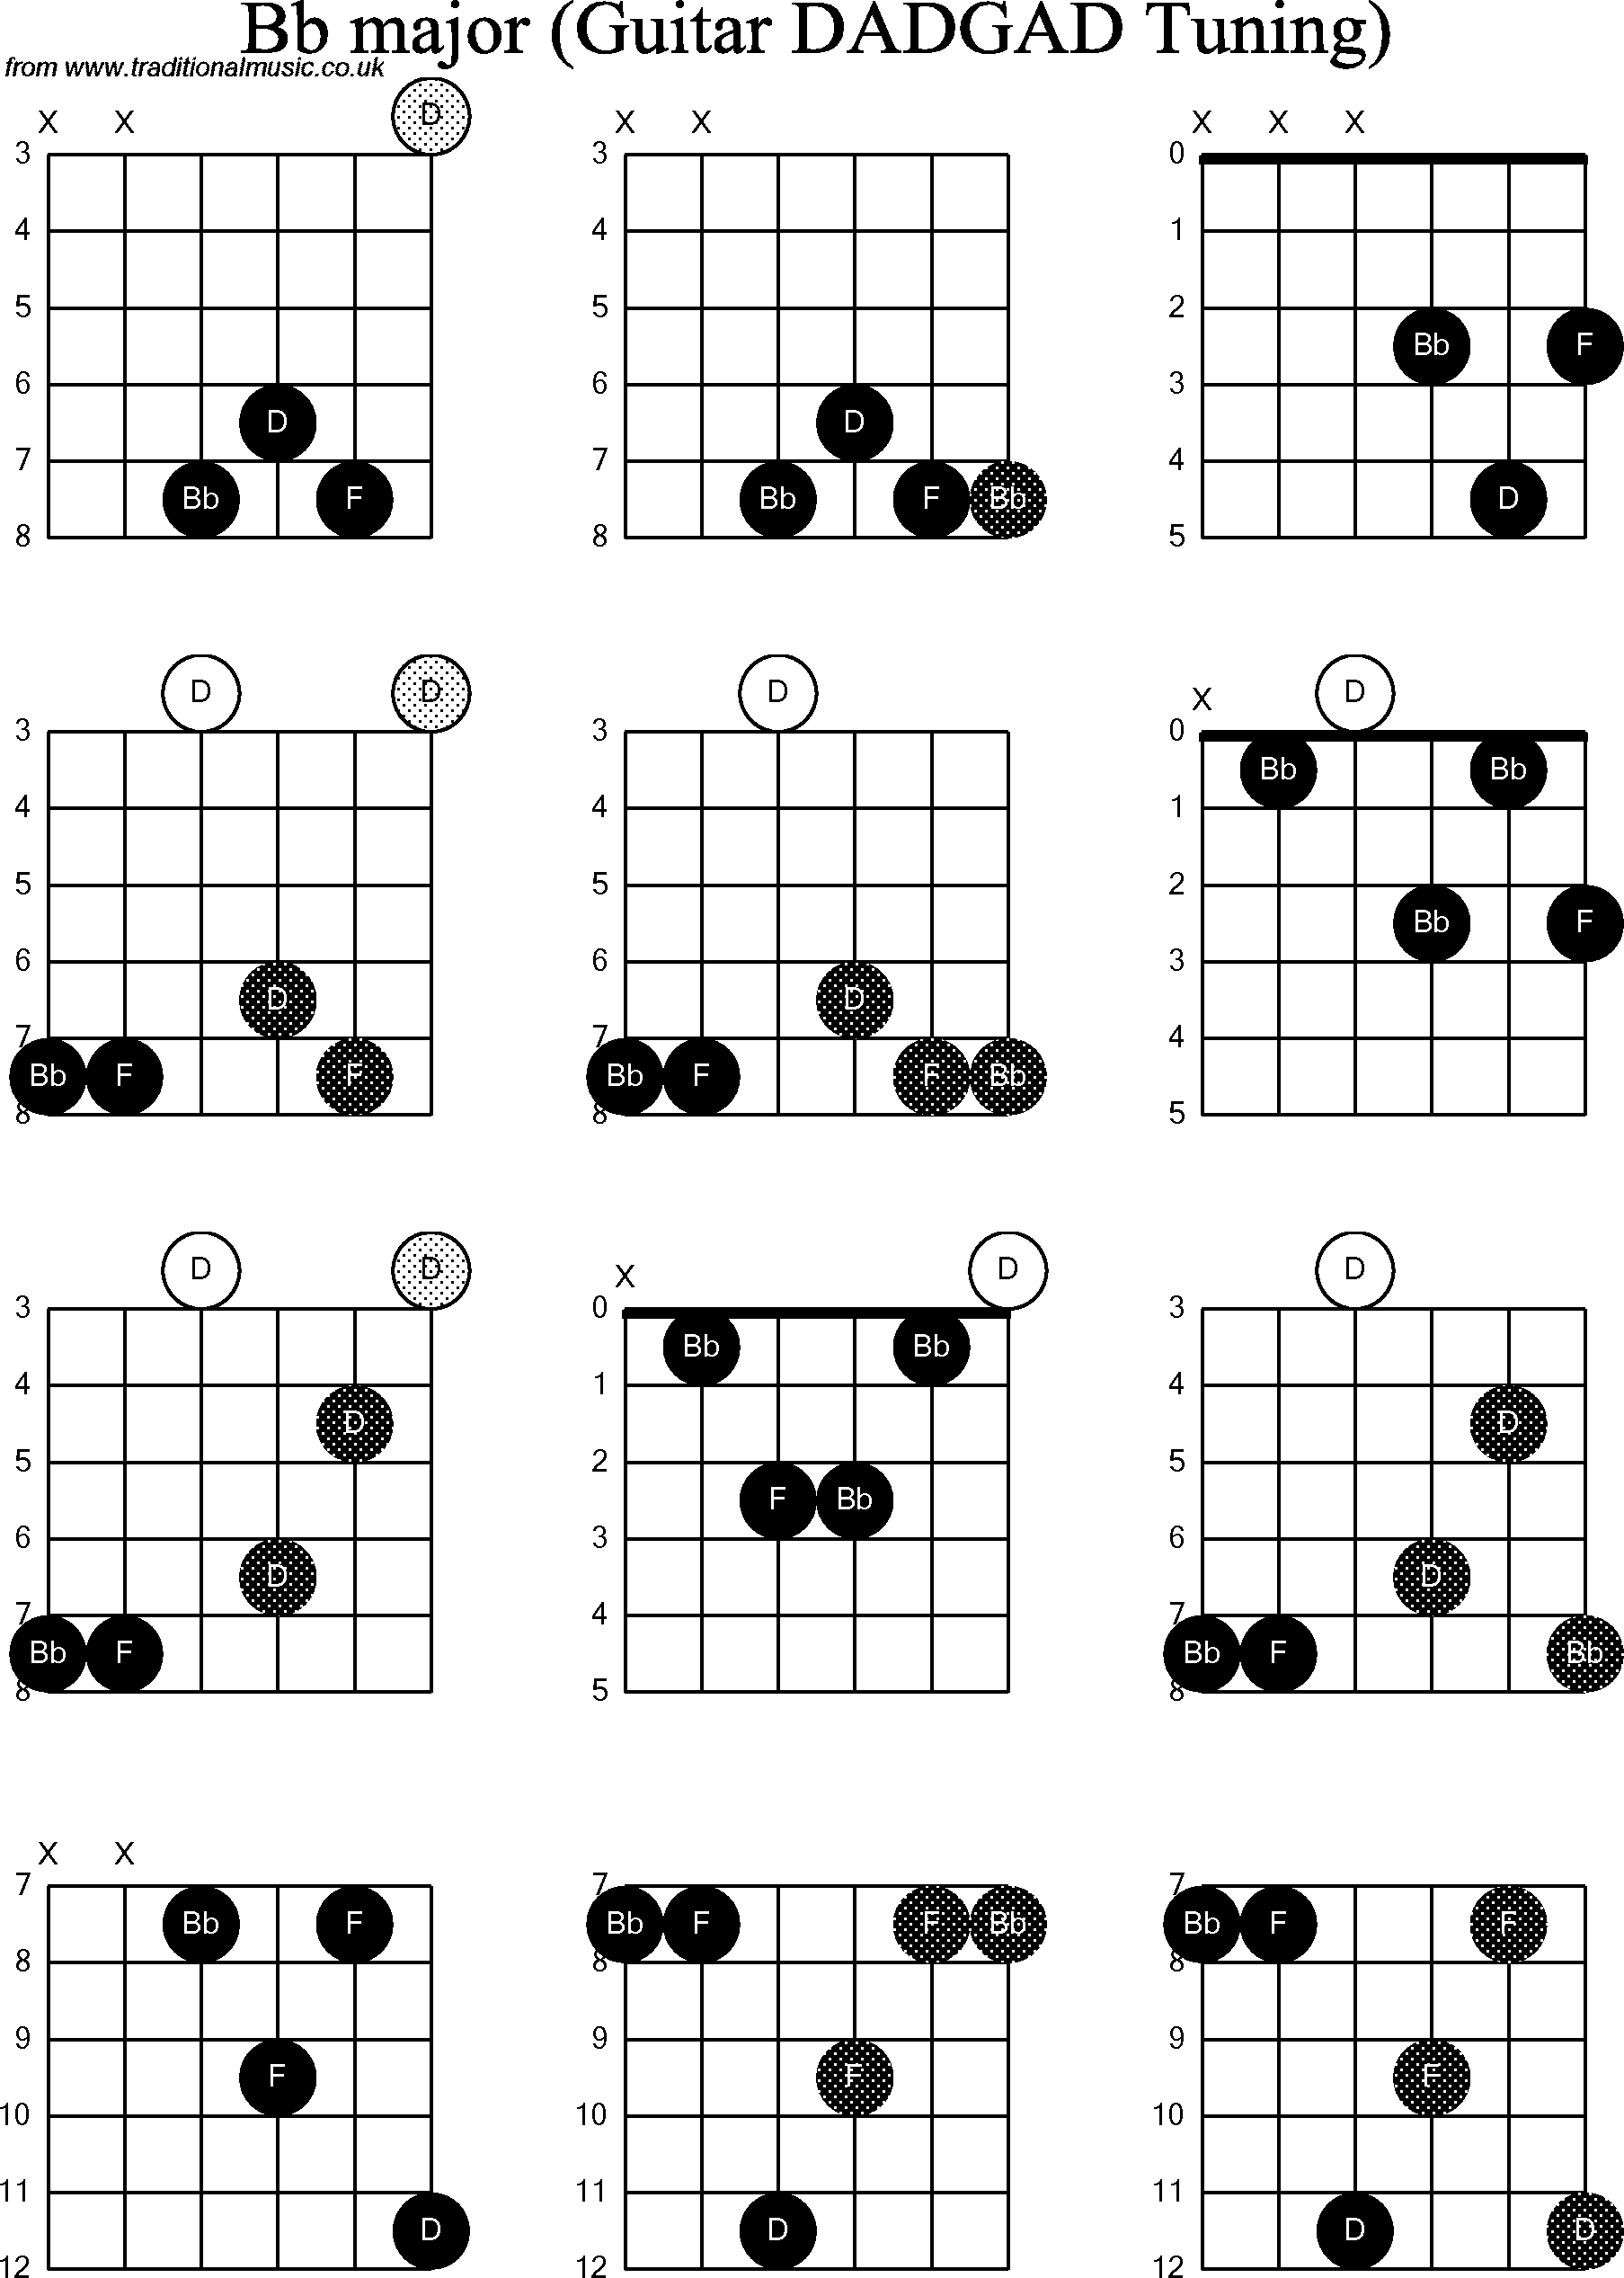 Chord Diagrams for D Modal Guitar(DADGAD), Bb